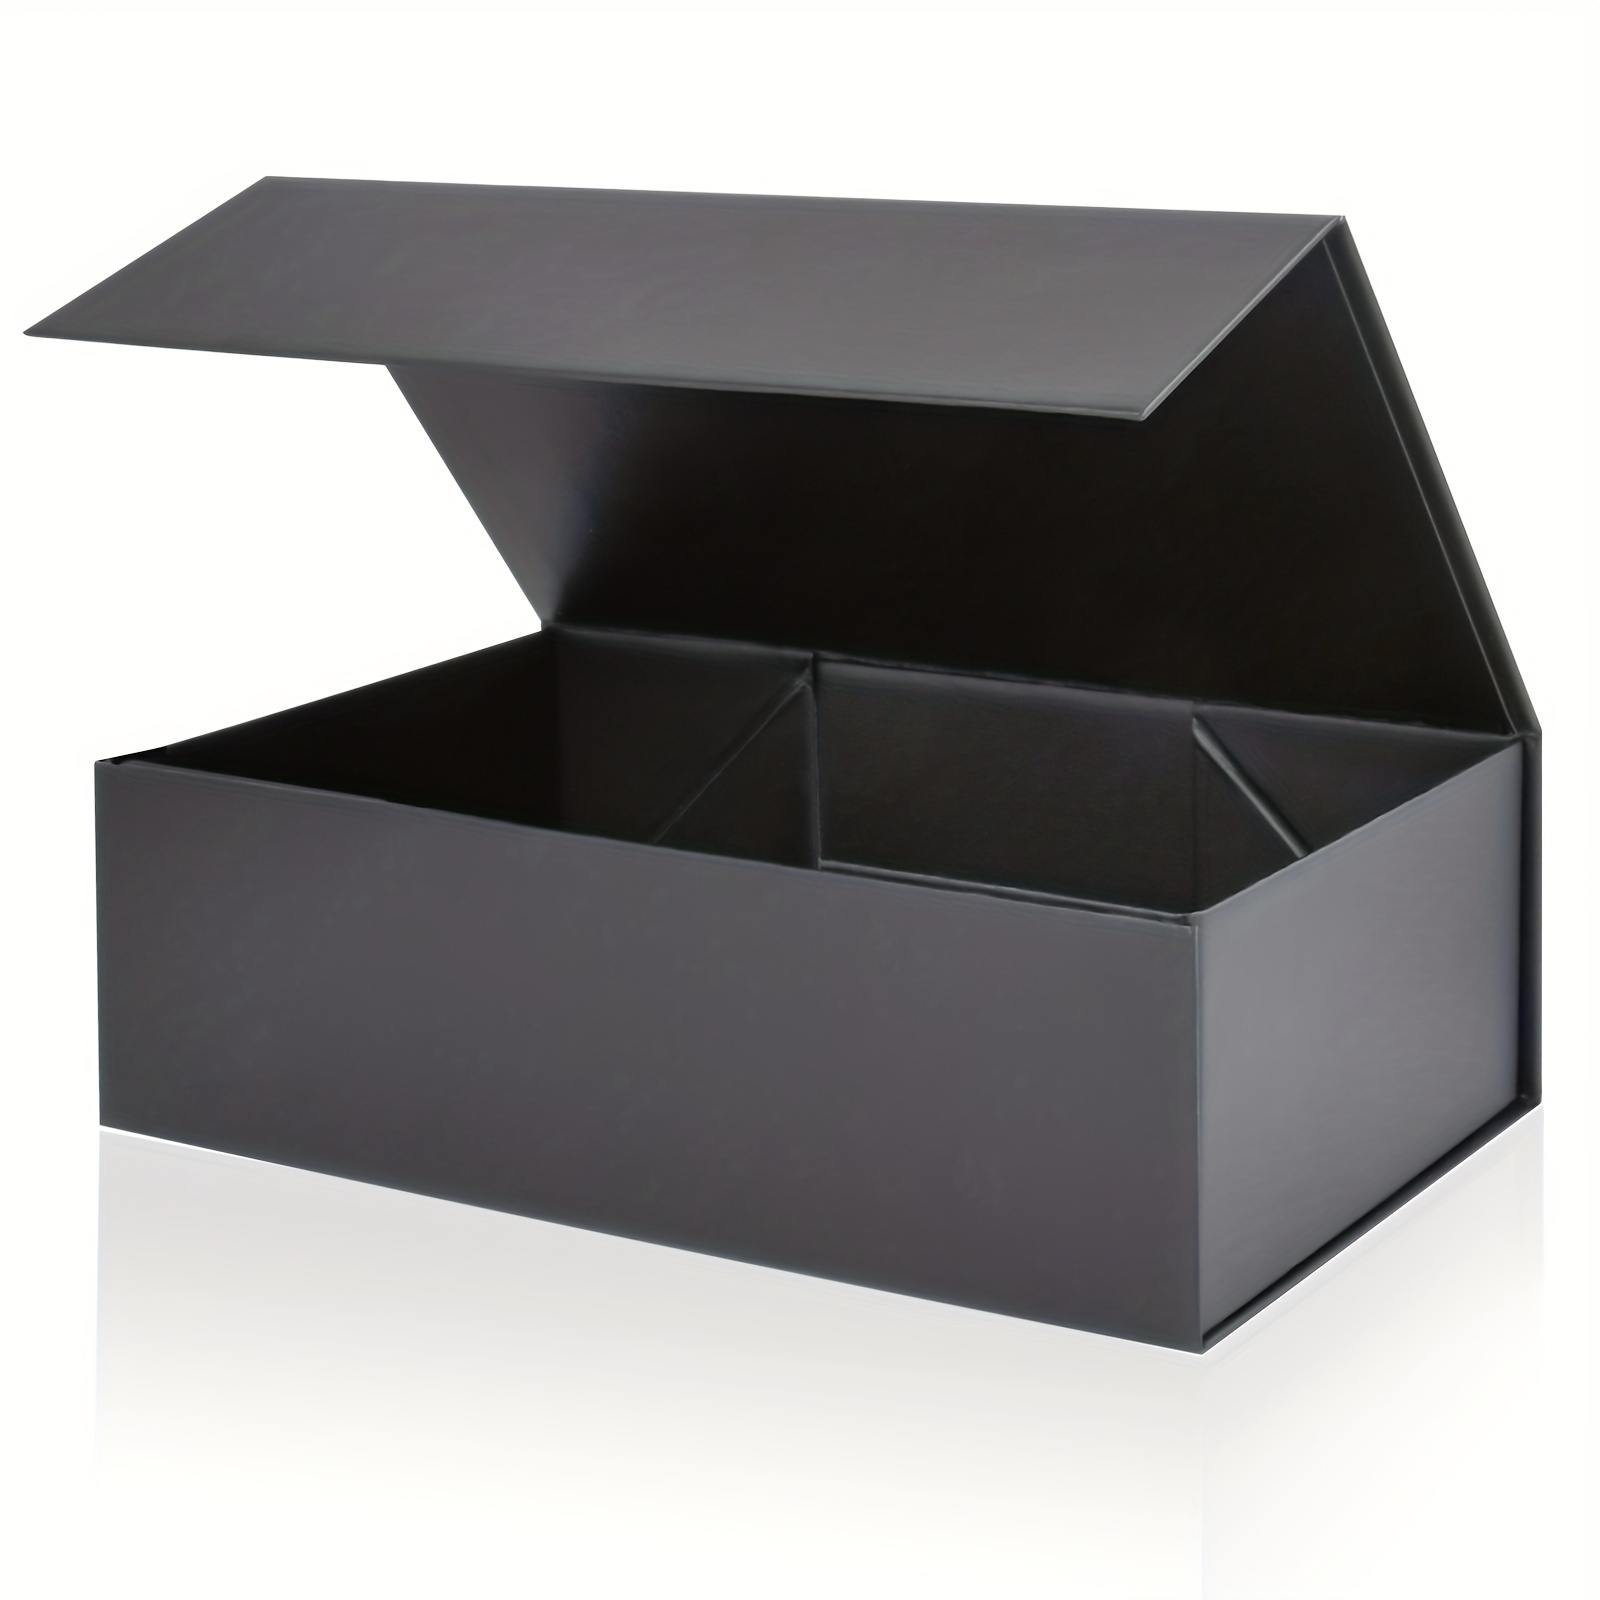 Sobres de cartón negro para envíos, cajas de almacenamiento de cartón  corrugado de 12 x 8 x 3 pulgadas, paquete de 15 unidades (tamaño interior:  11.3